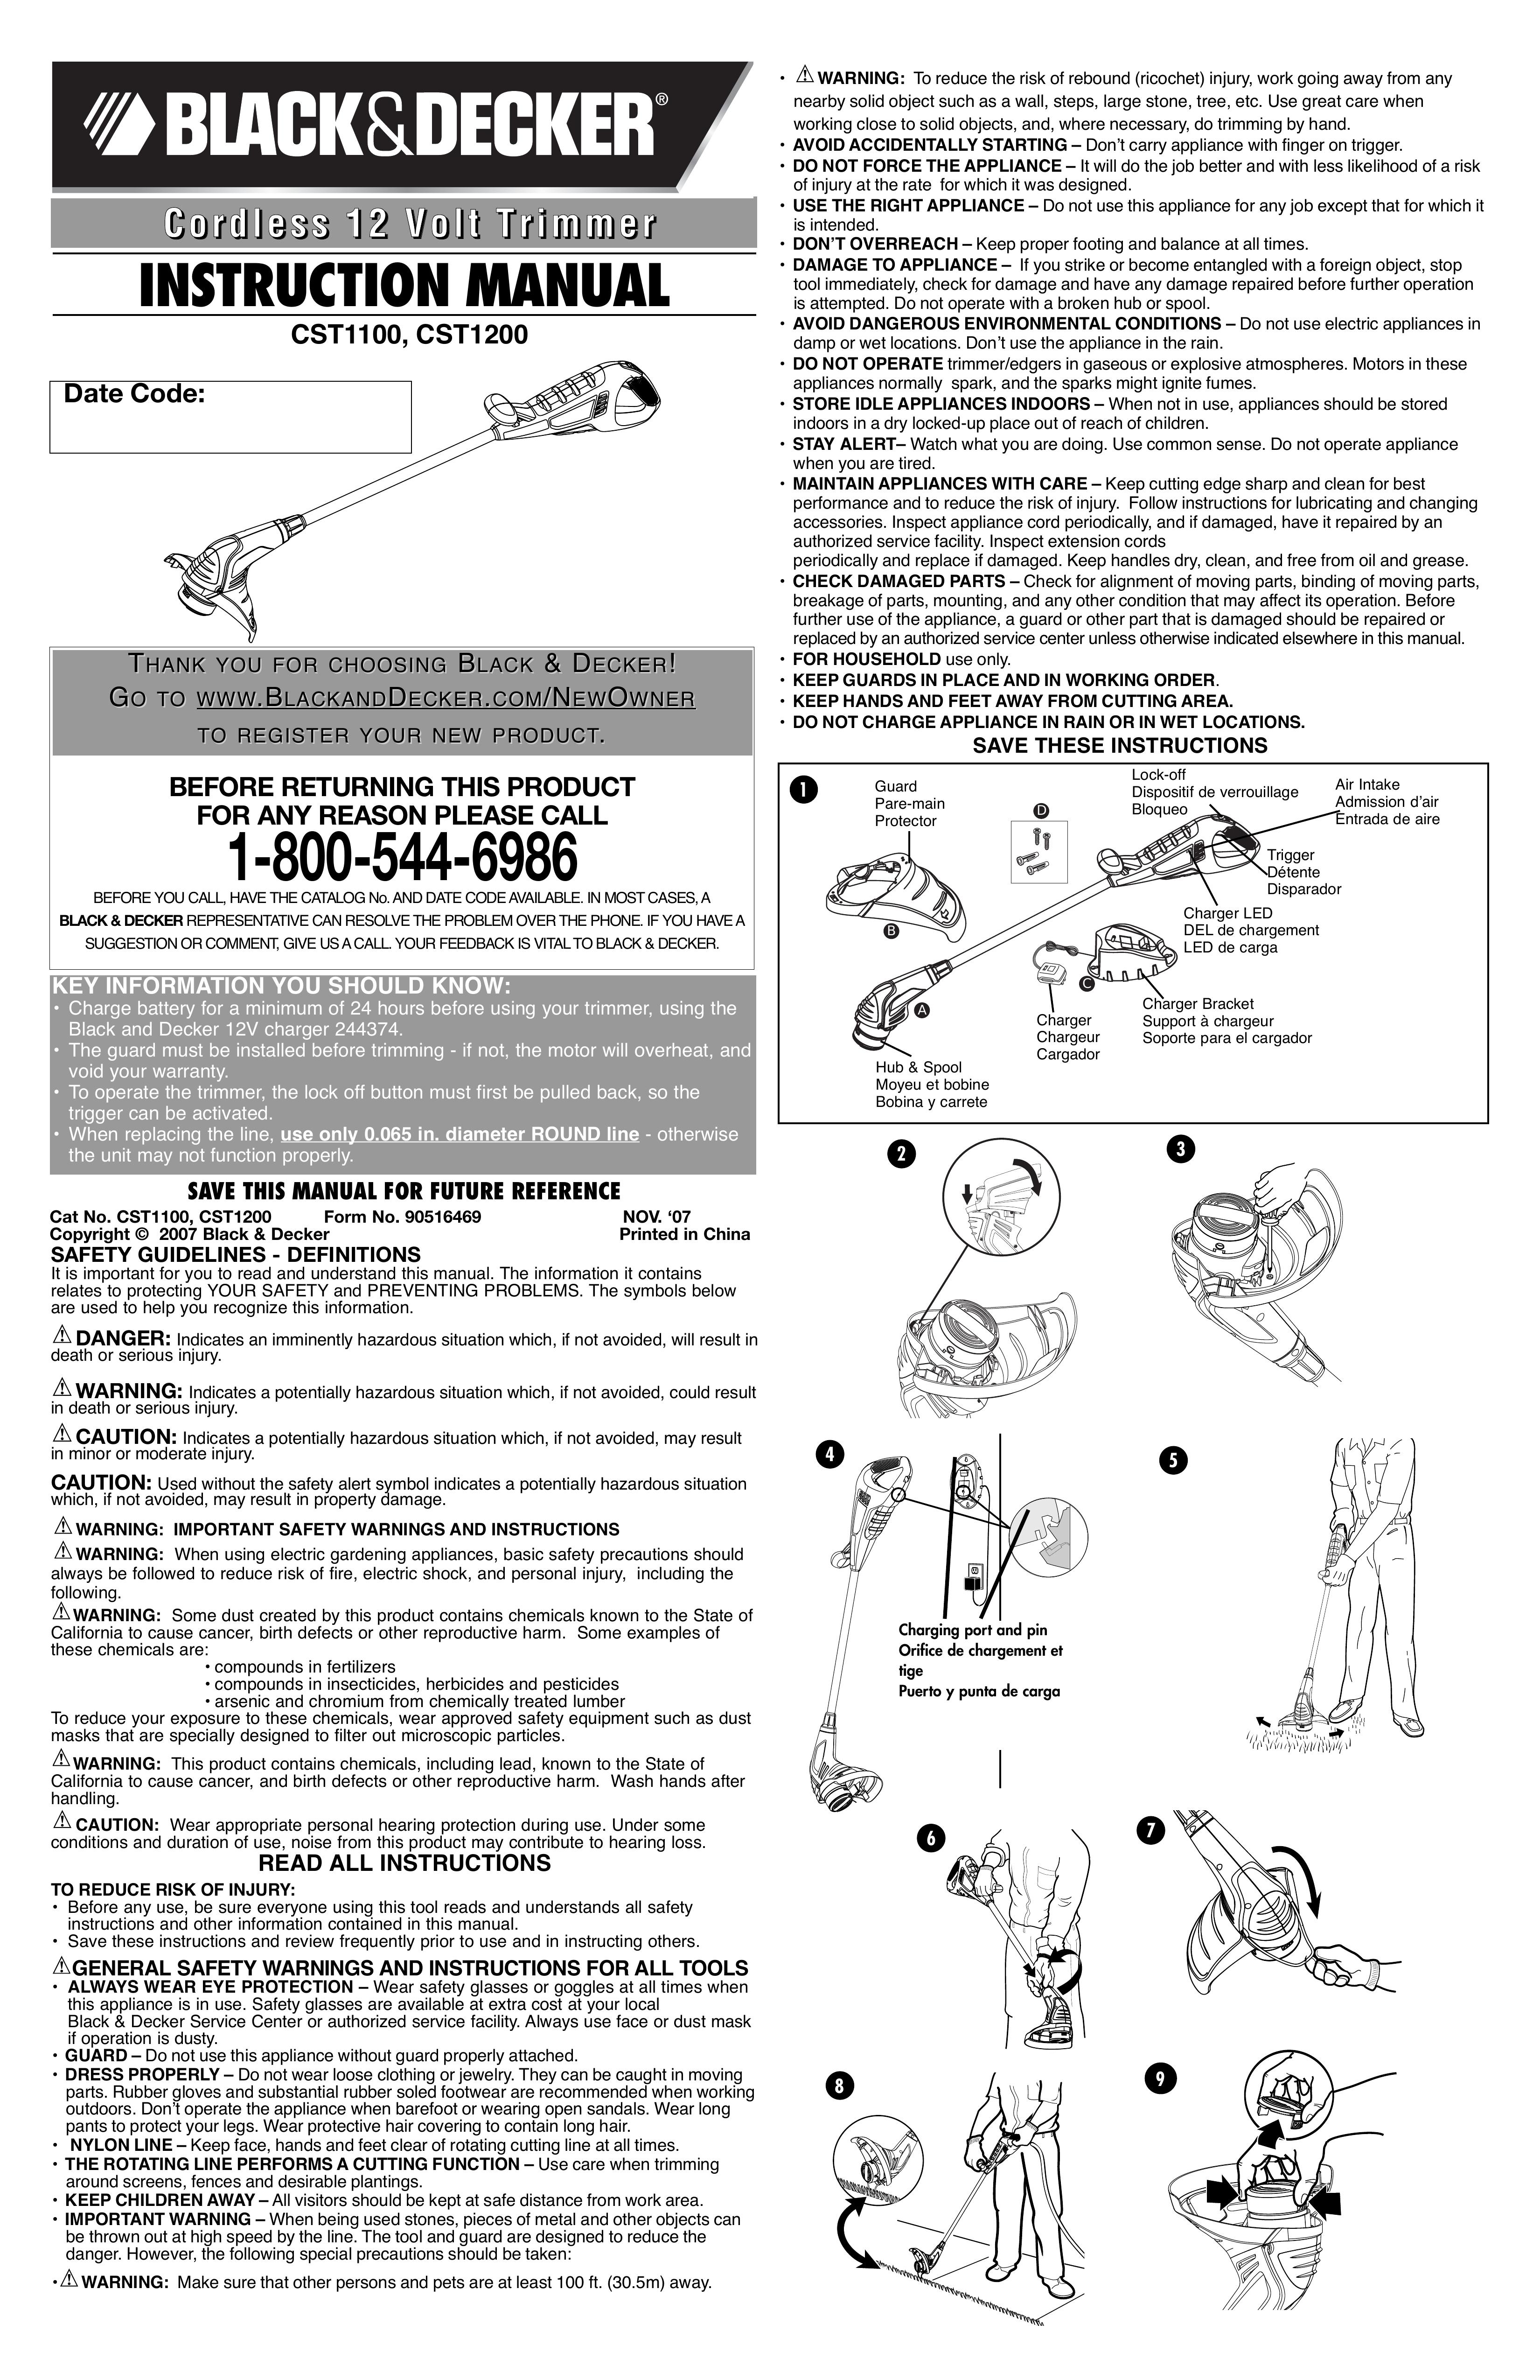 Black & Decker CST1200R Trimmer User Manual